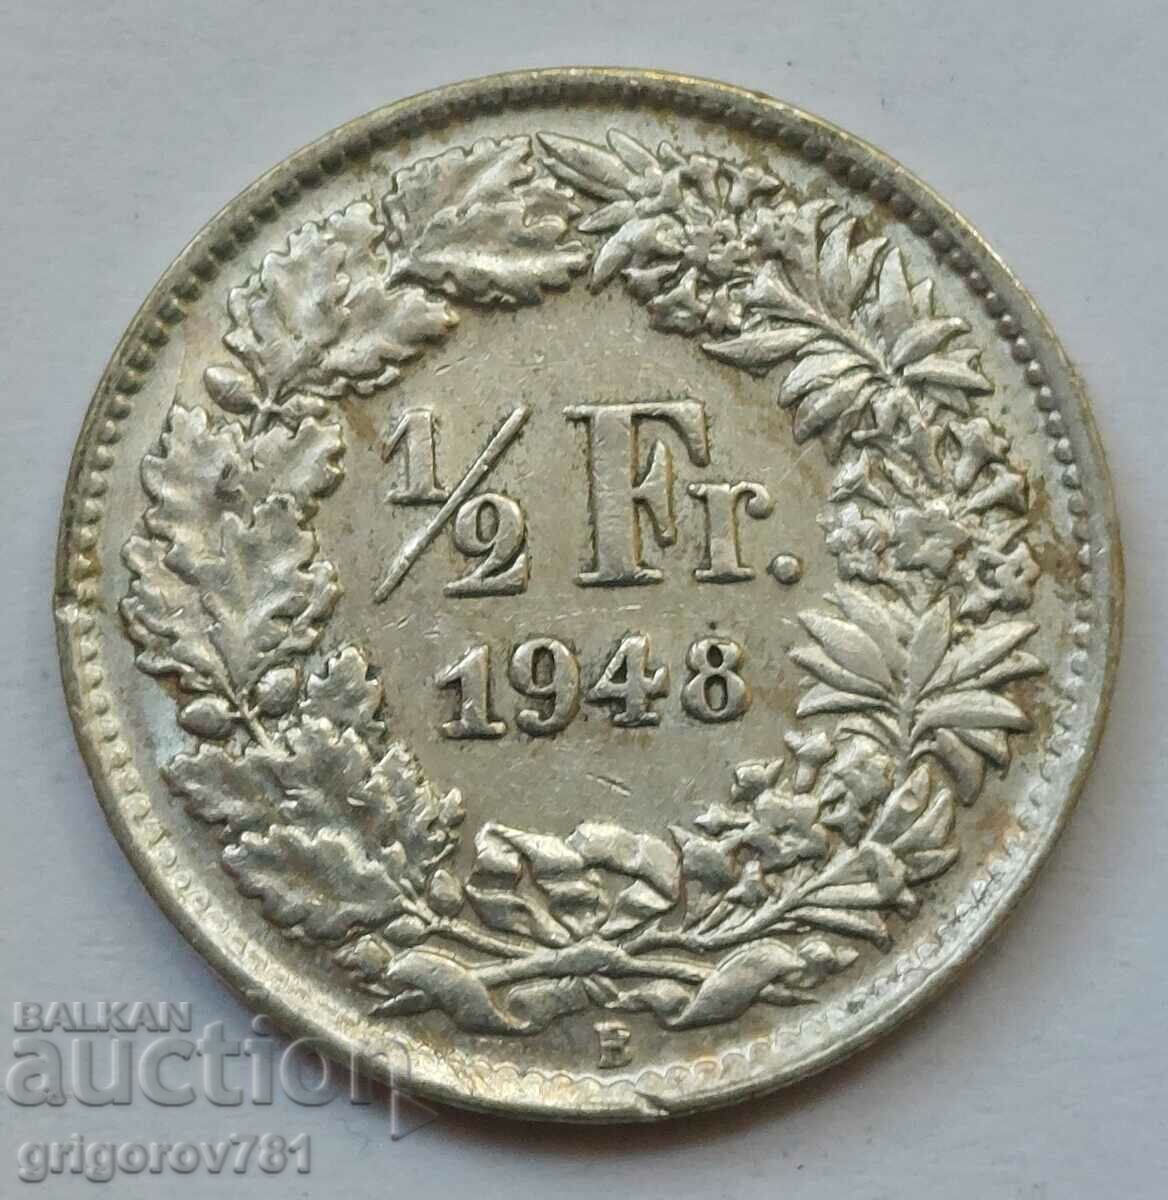 1/2 Franc Silver Switzerland 1948 B - Silver Coin #190